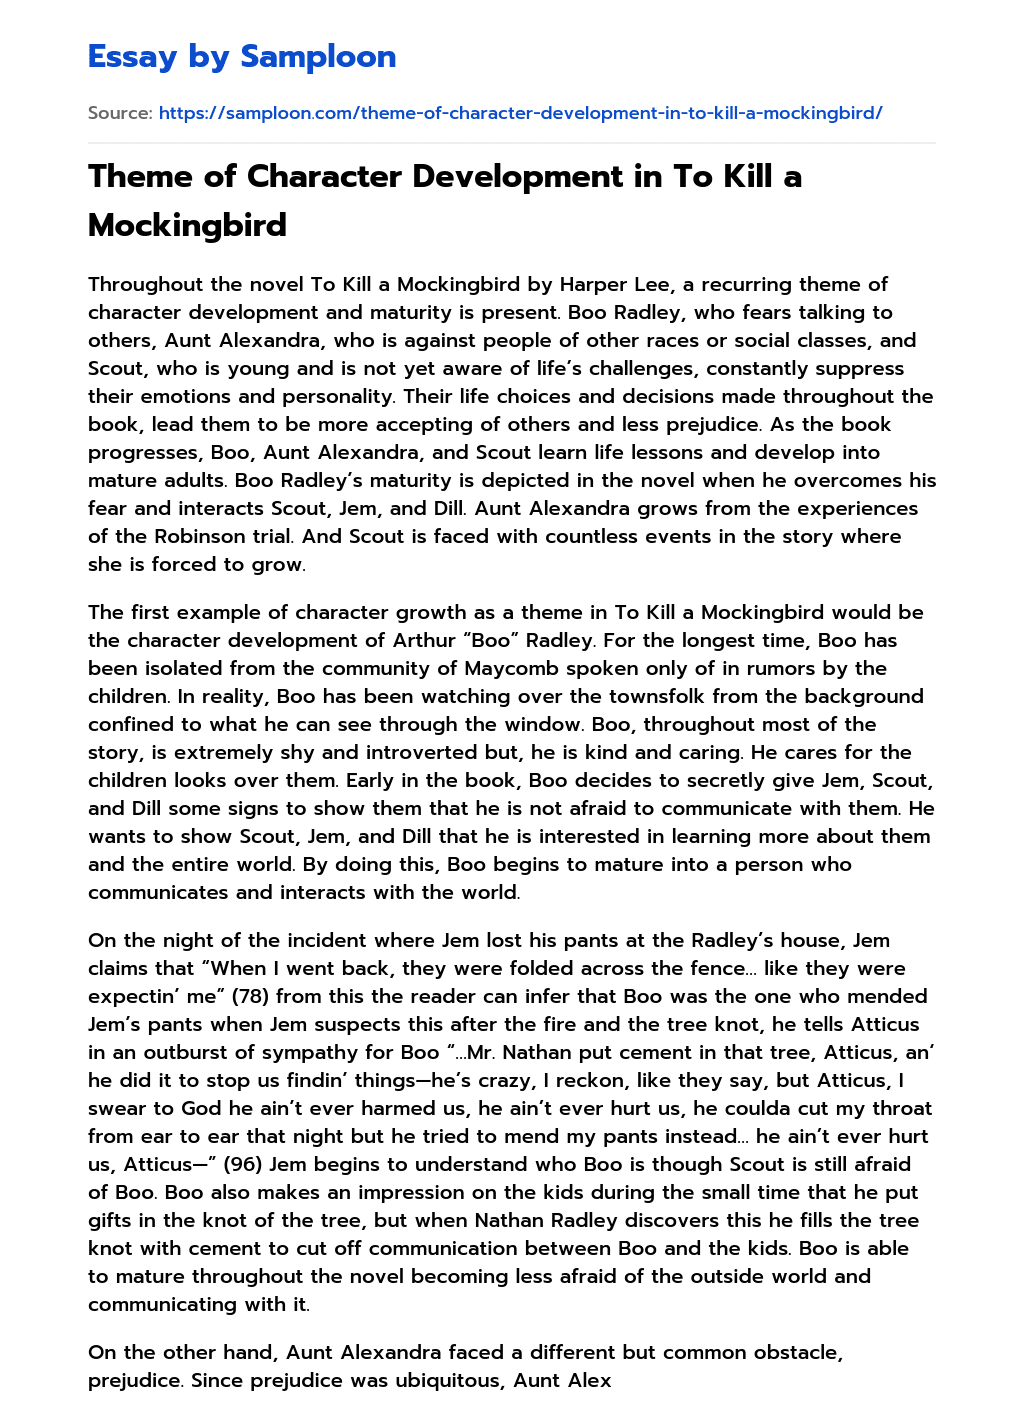 Theme of Character Development in To Kill a Mockingbird essay